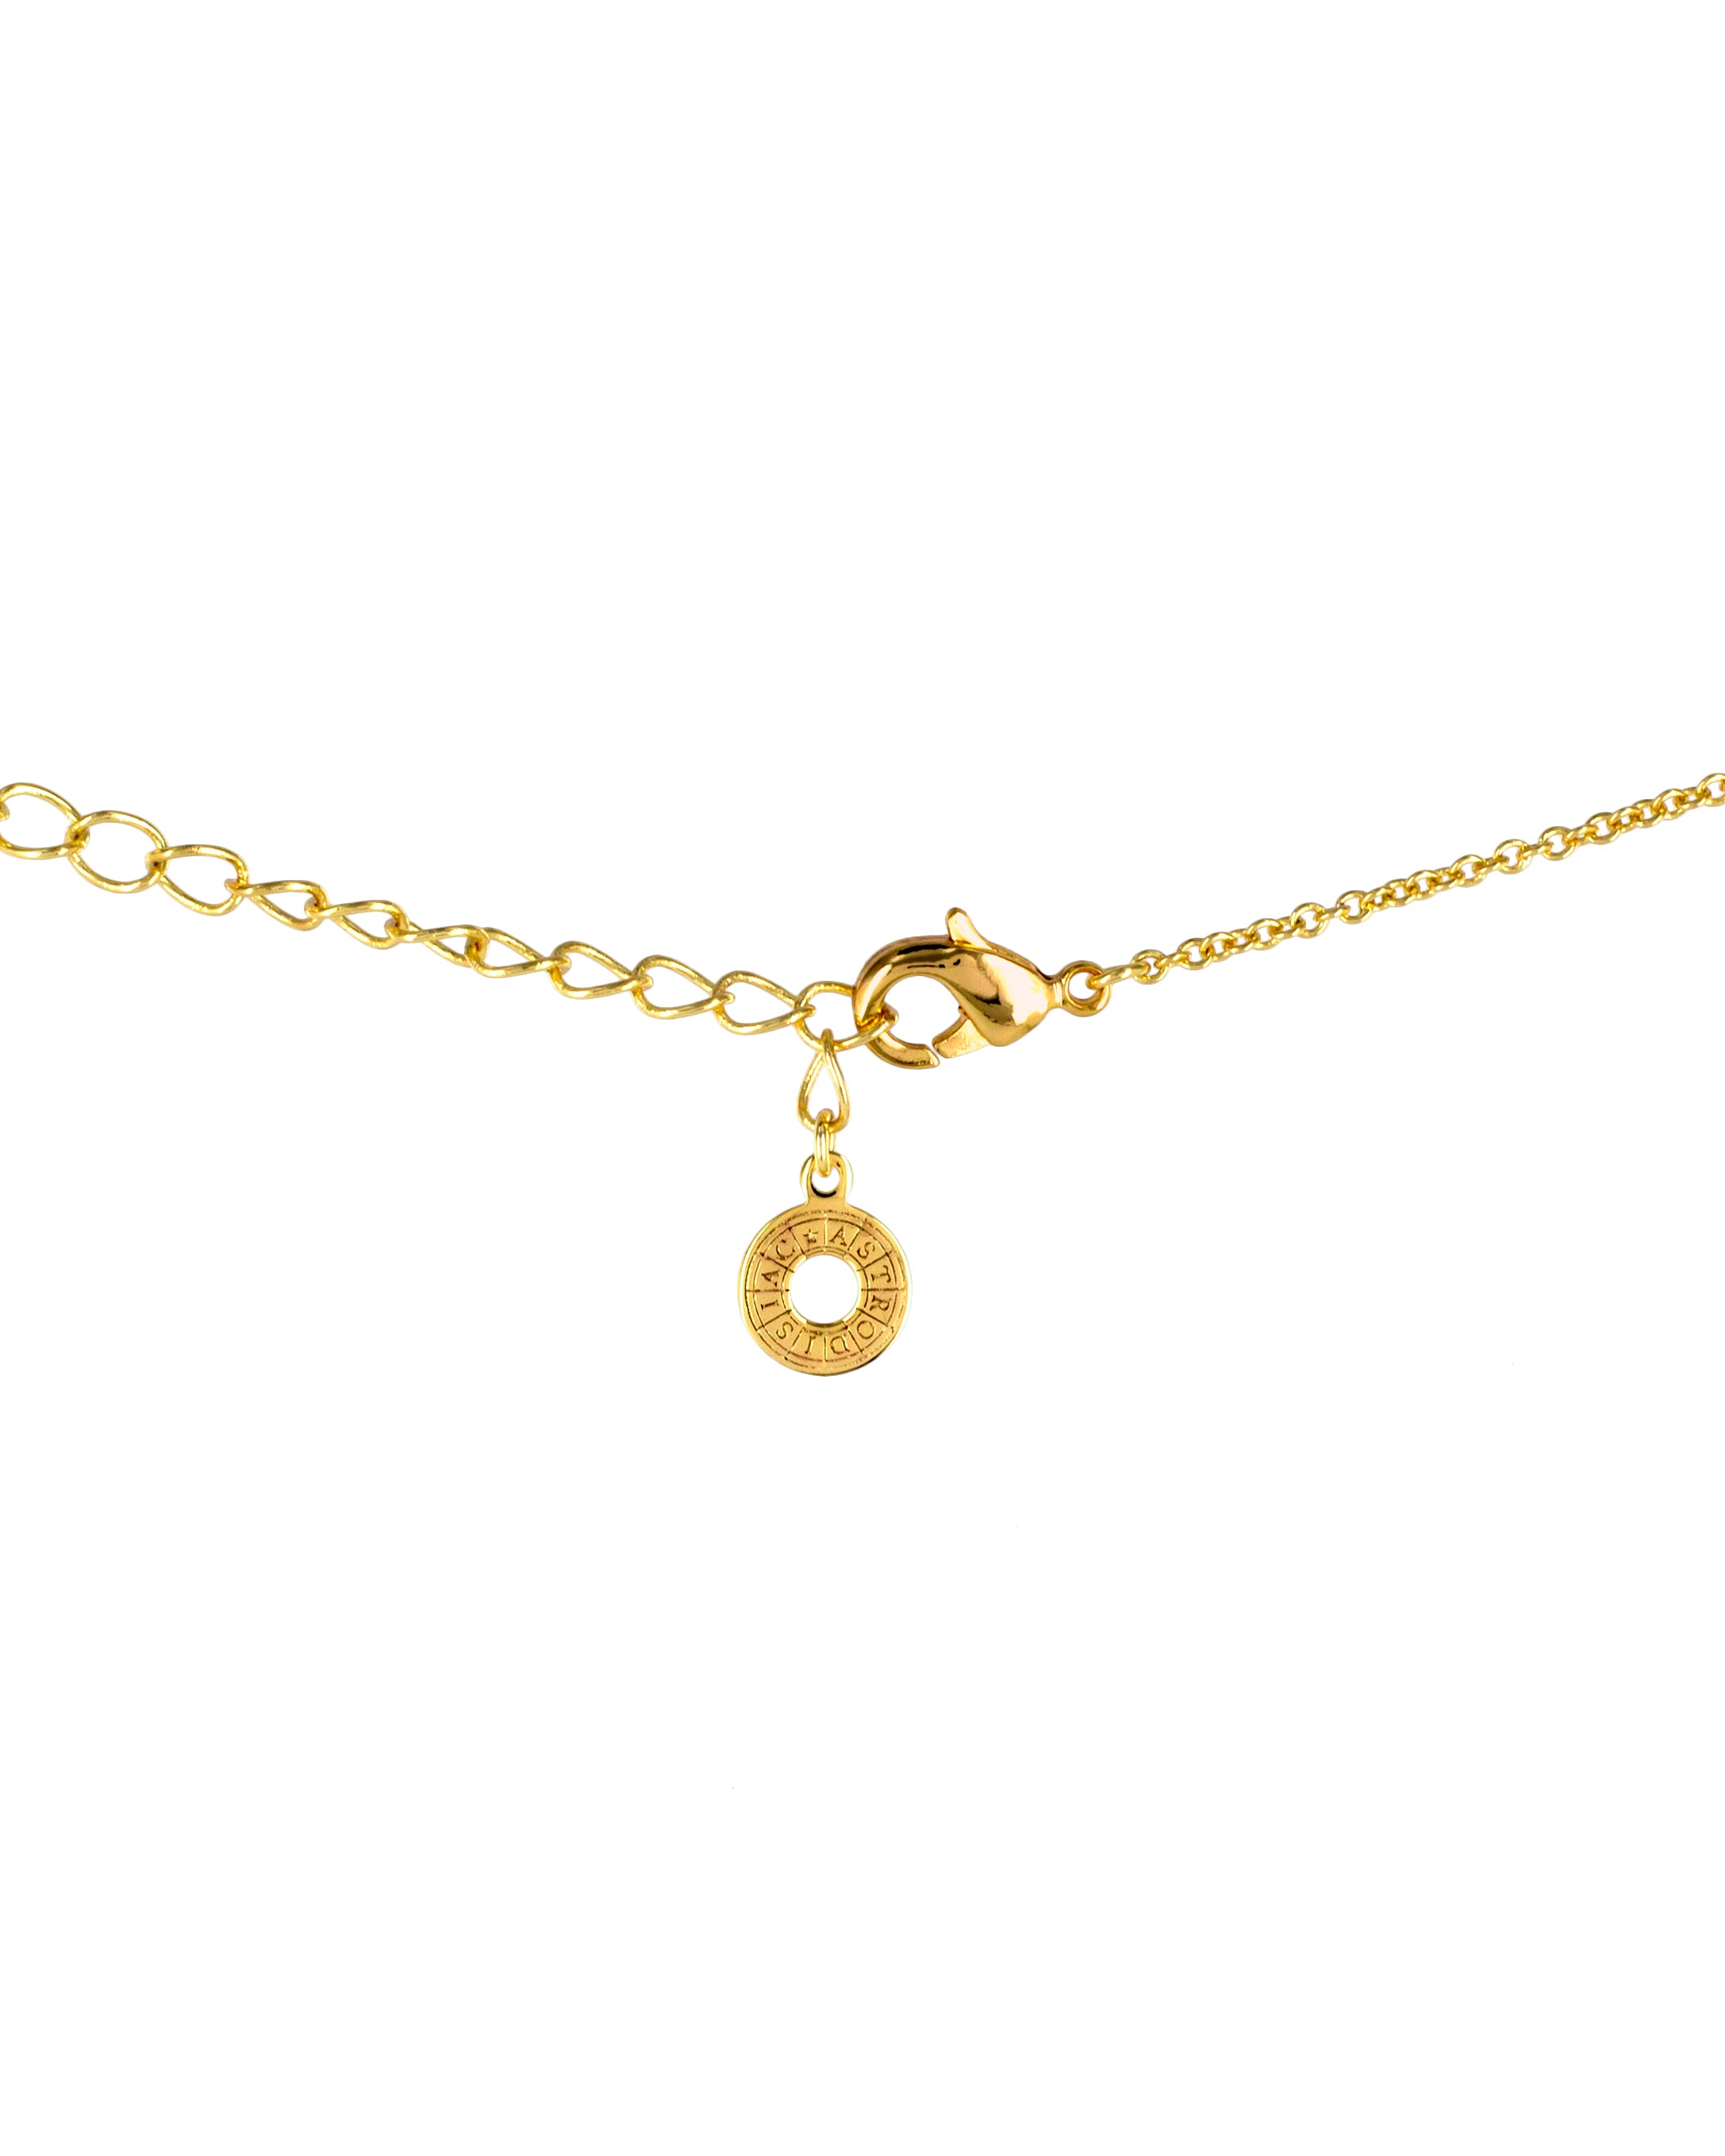 astrologie collier balance- astrodisiac - bijoux - paris - claire naa - jewels - necklace libra - astrology